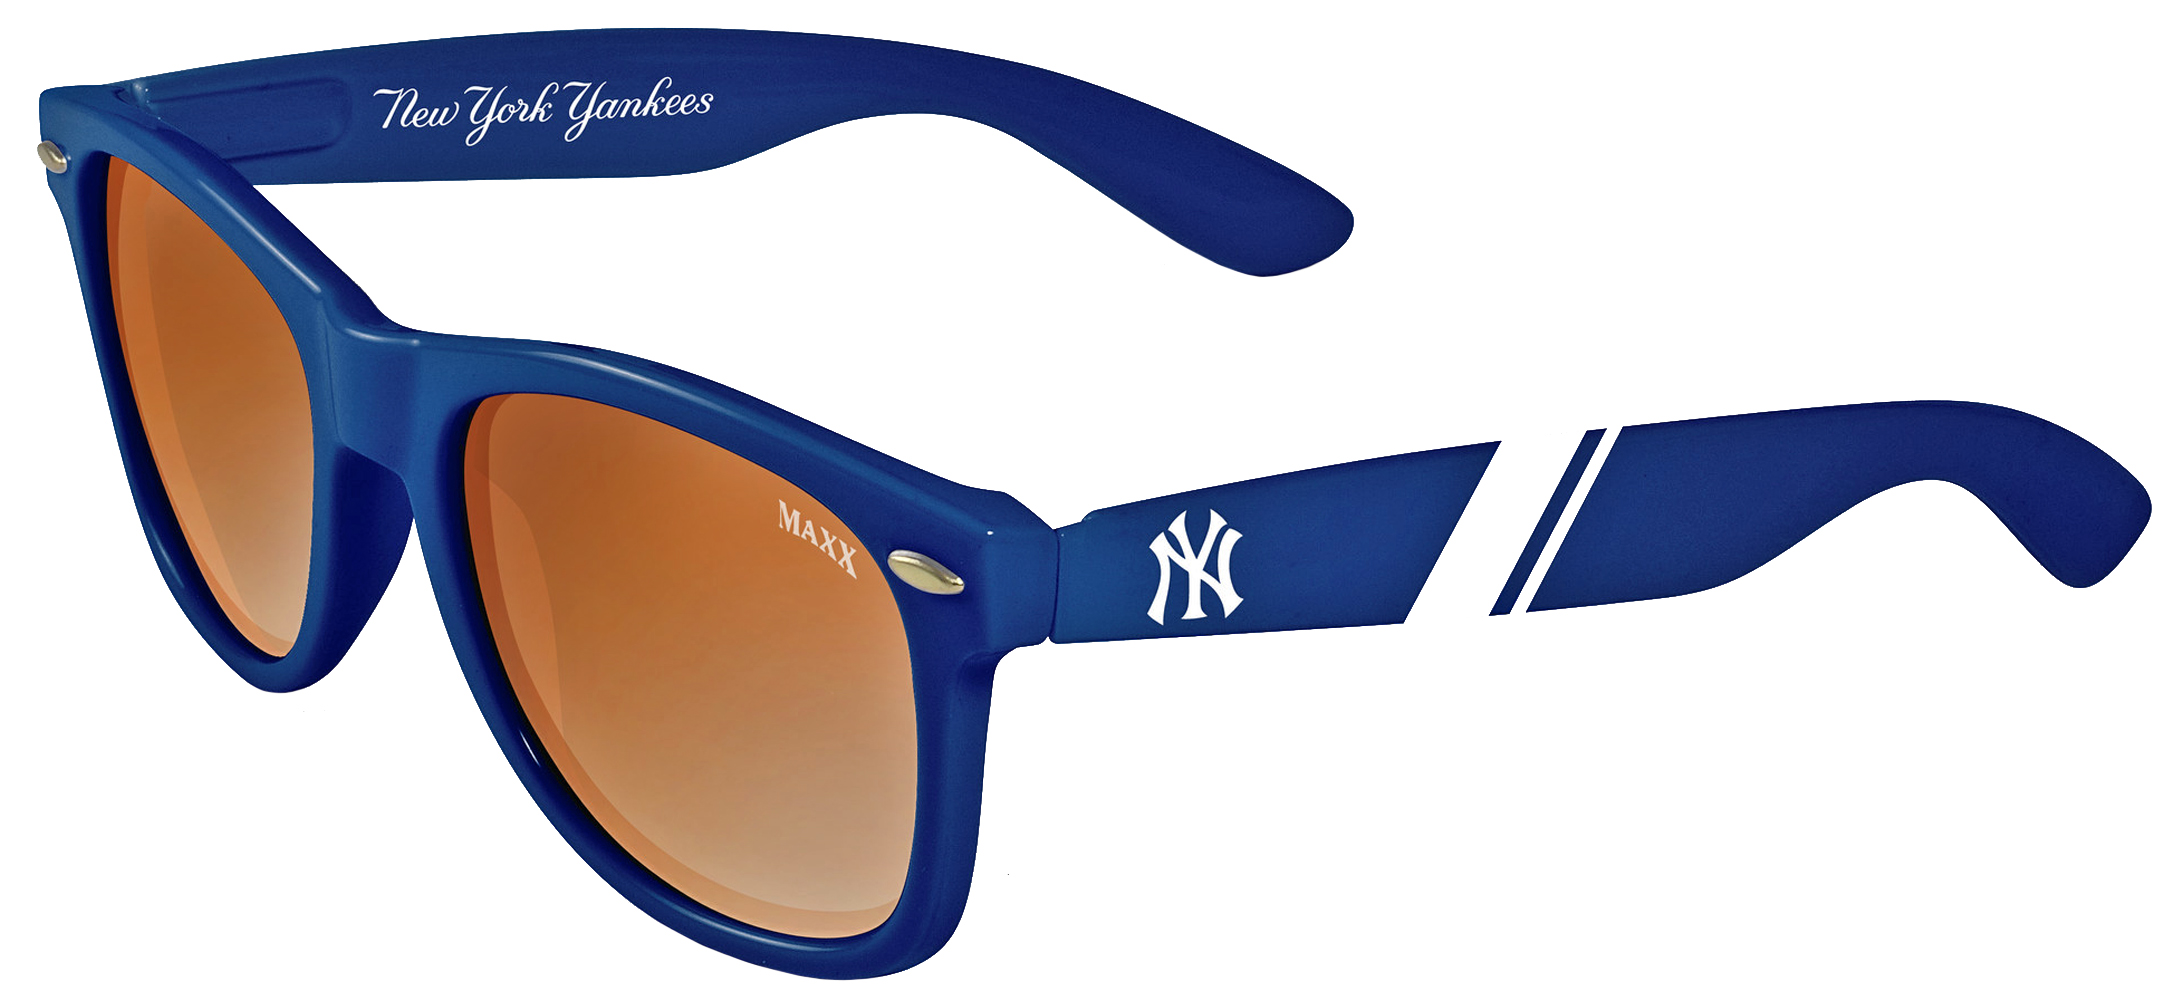 E113138 New York Yankees MLB Retro Sunglasses